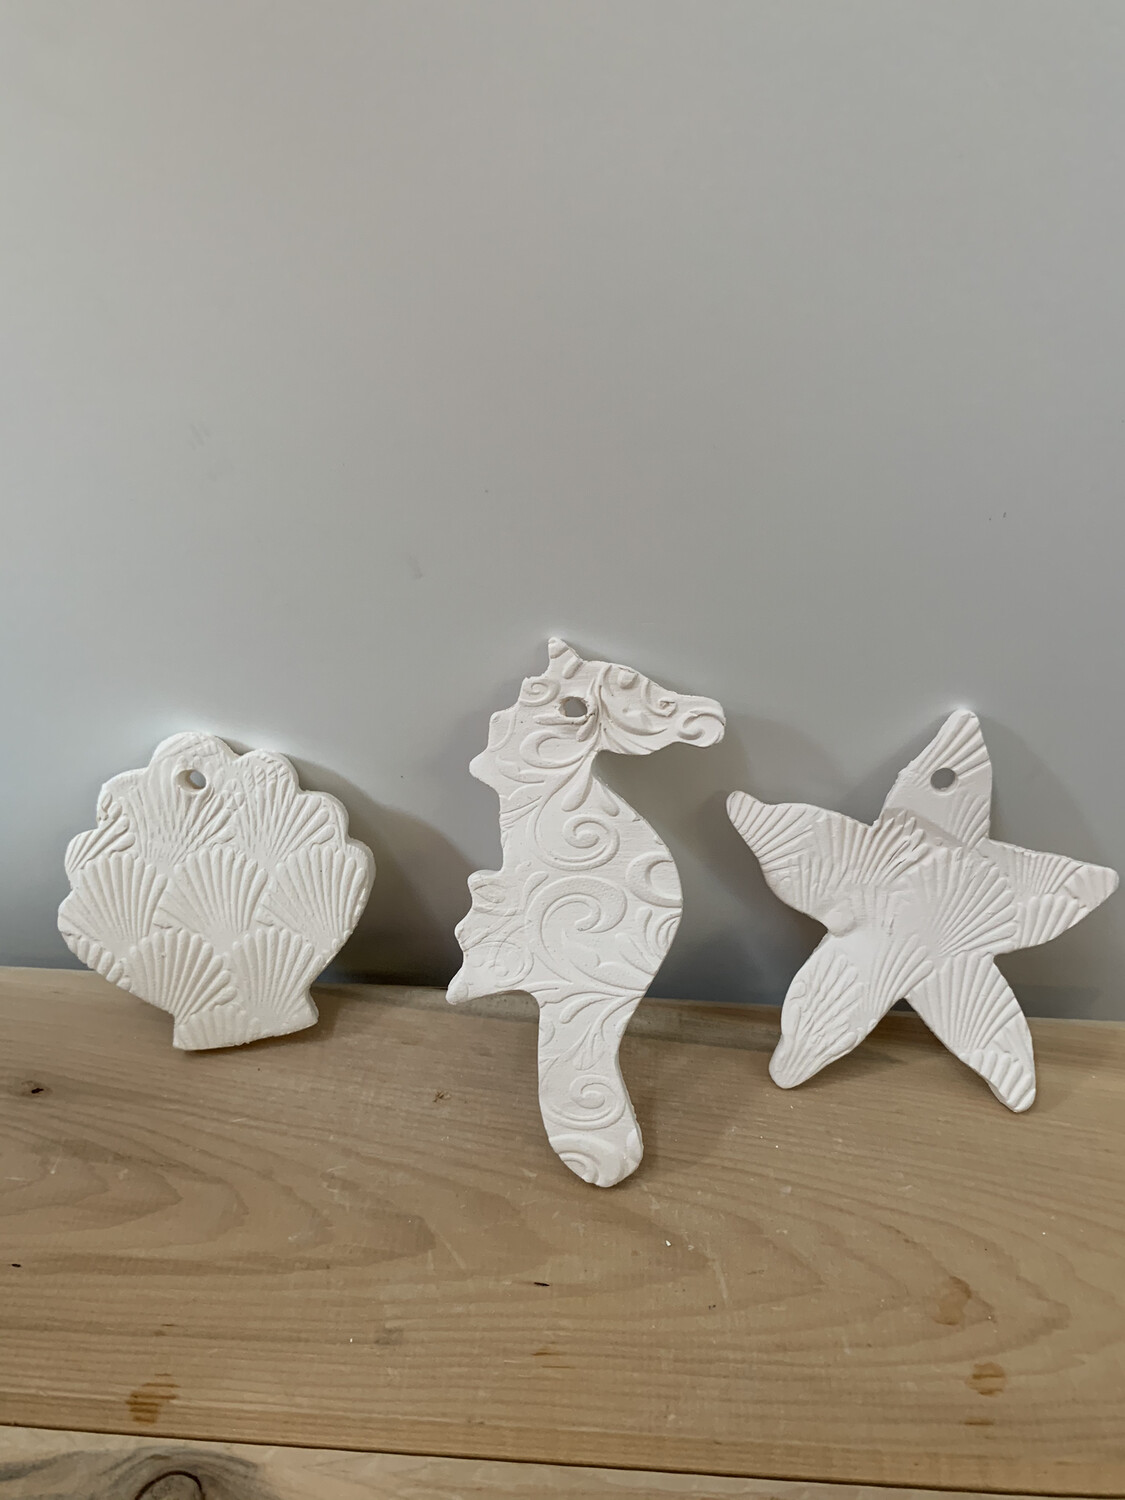 NO FIRE Paint Your Own Pottery Kit - 
Ceramic Set of 3 Stone Harbor NJ Christmas Ornaments - Starfish, Seahorse, Scallop Shell - Acrylic Paint Kit